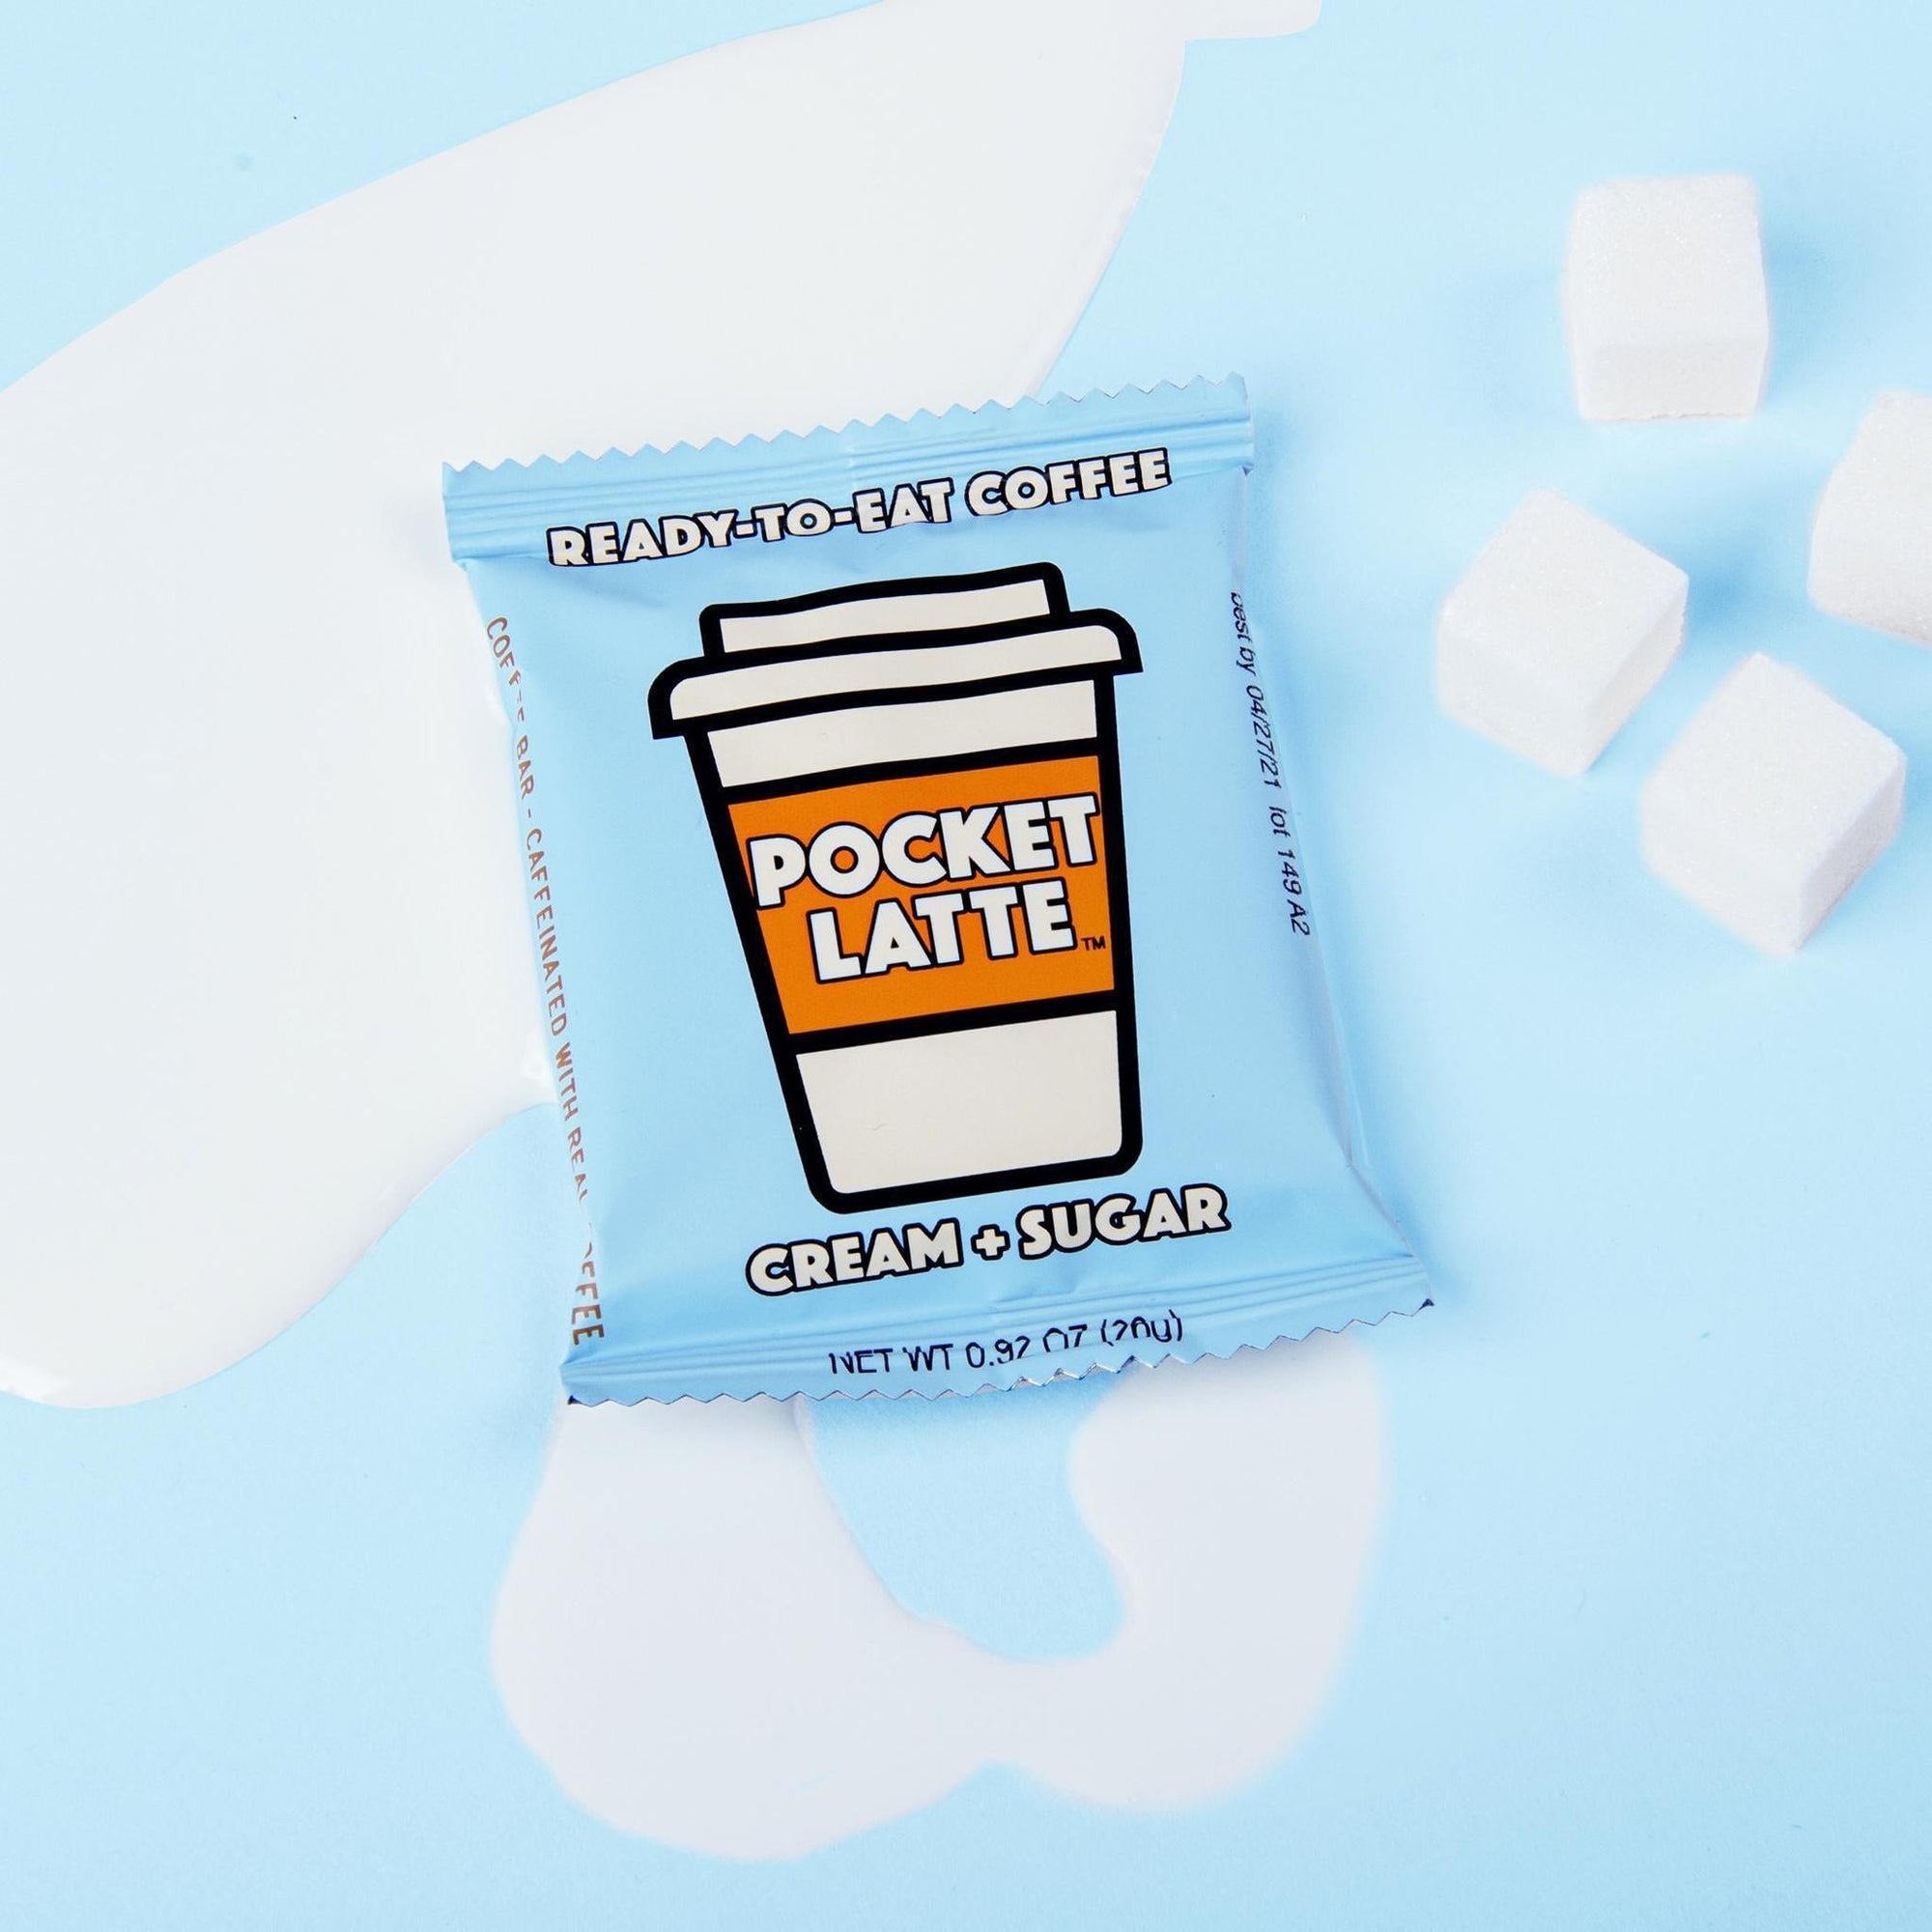 Pocket Latte Ready to Eat Coffee Chocolate | Cream & Sugar